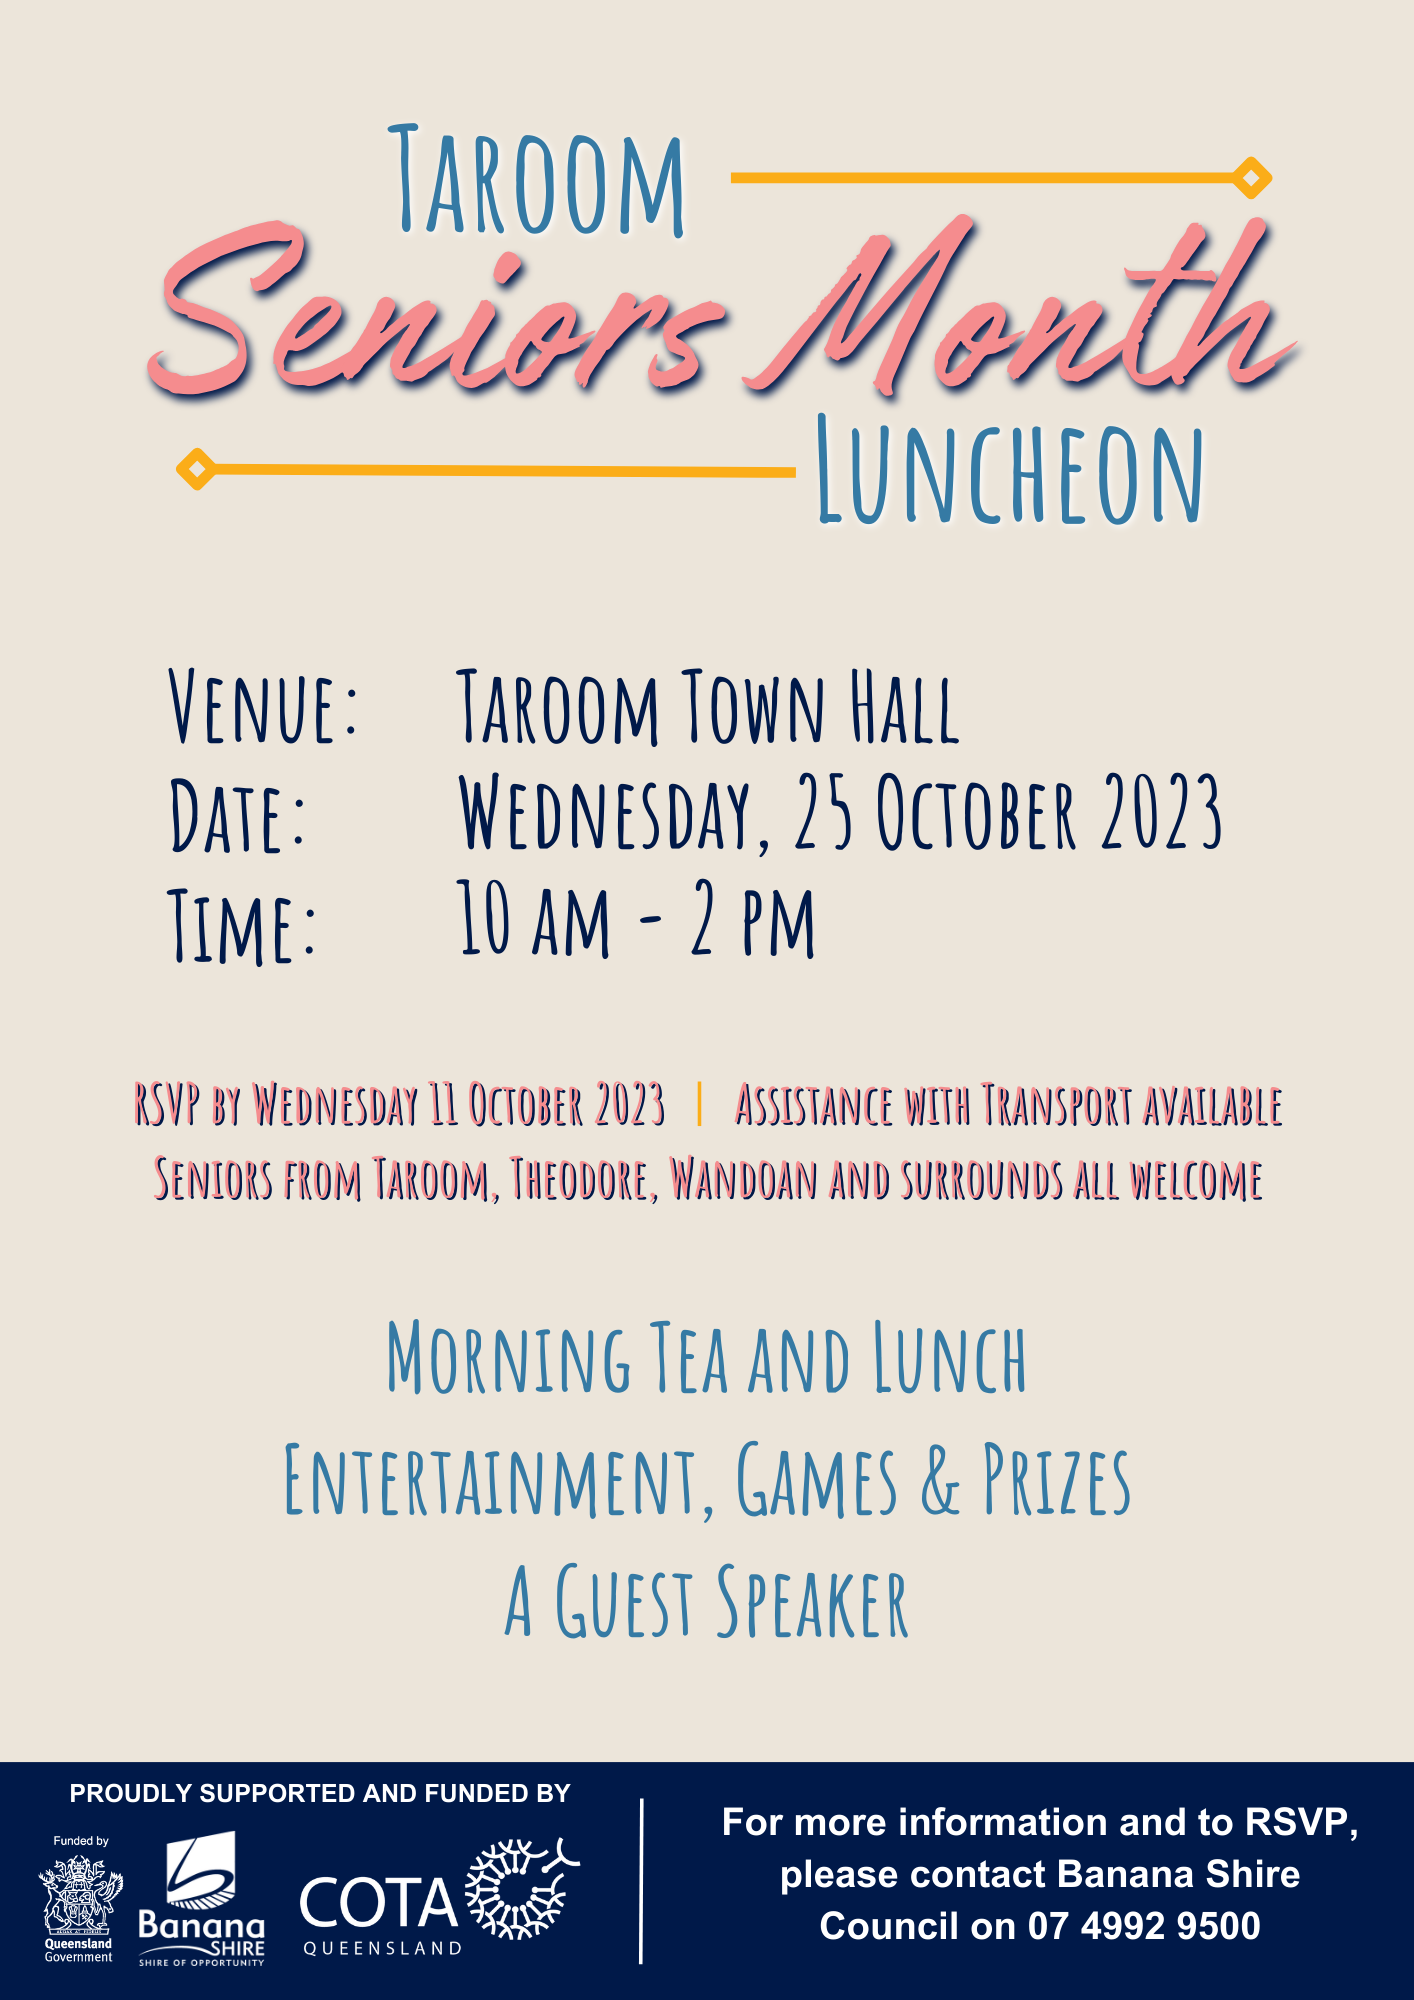 Taroom seniors week luncheon 2023 -updated time